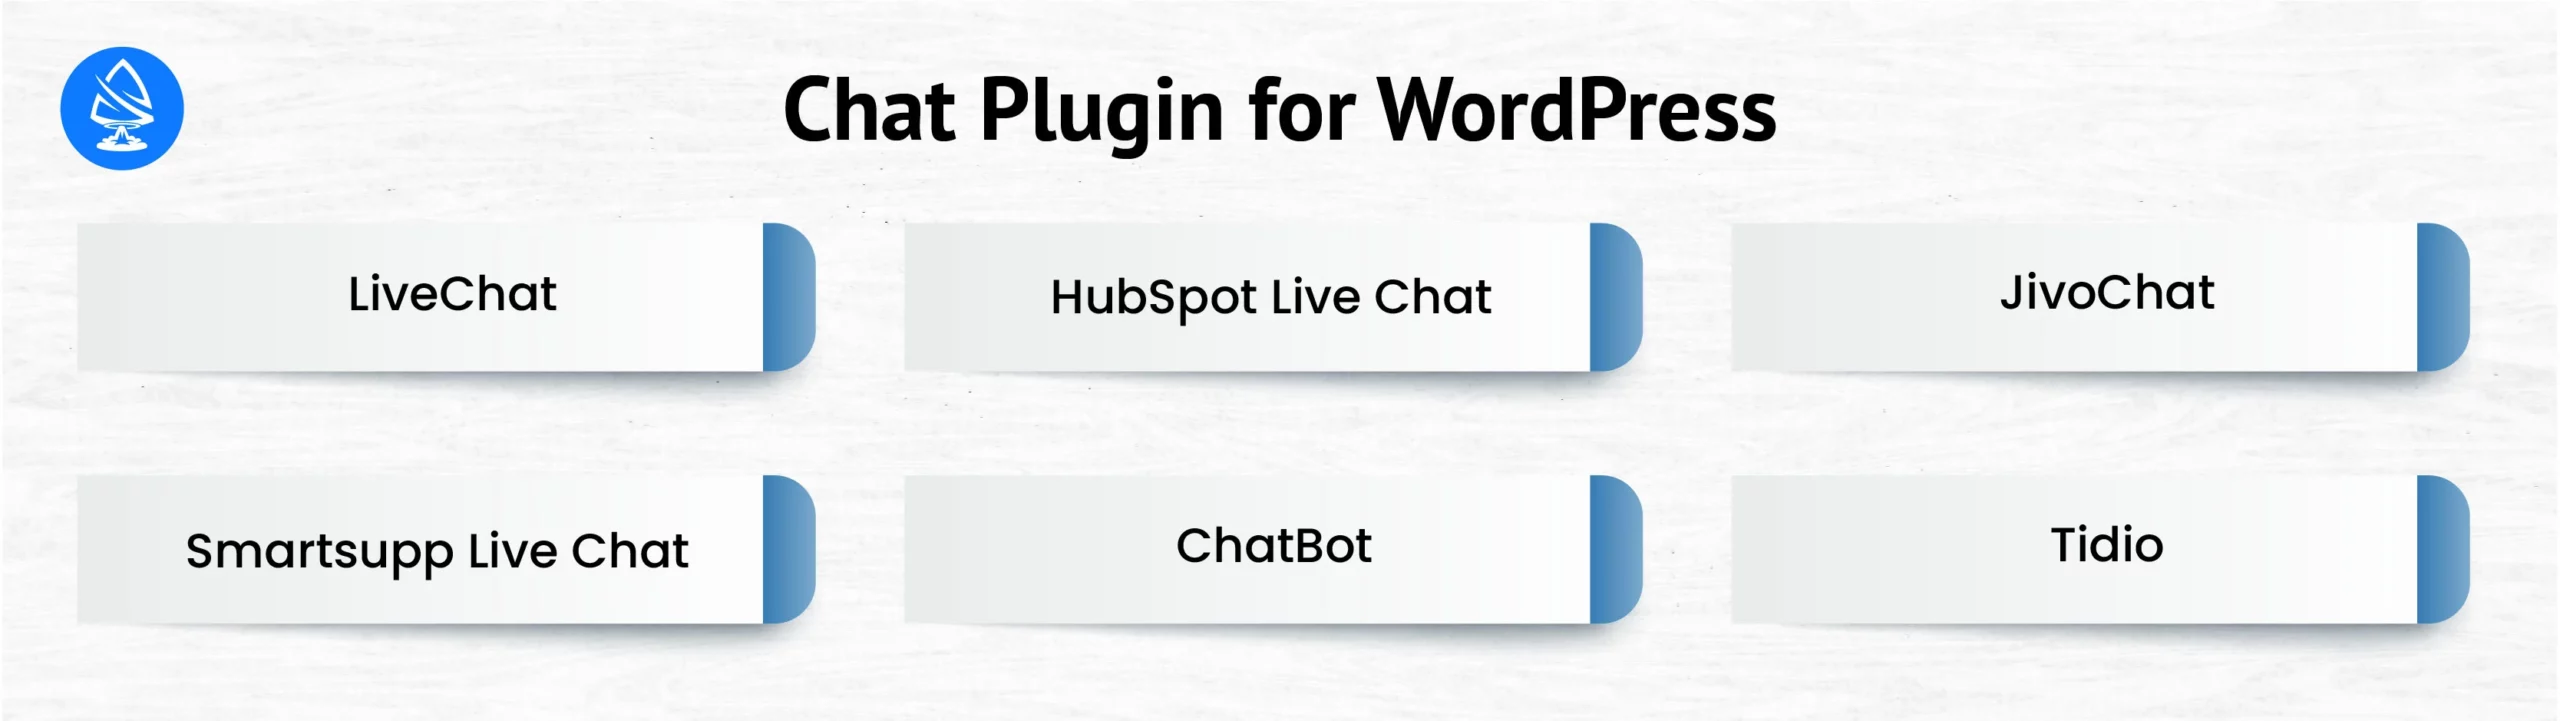 Chat Plugin for WordPress